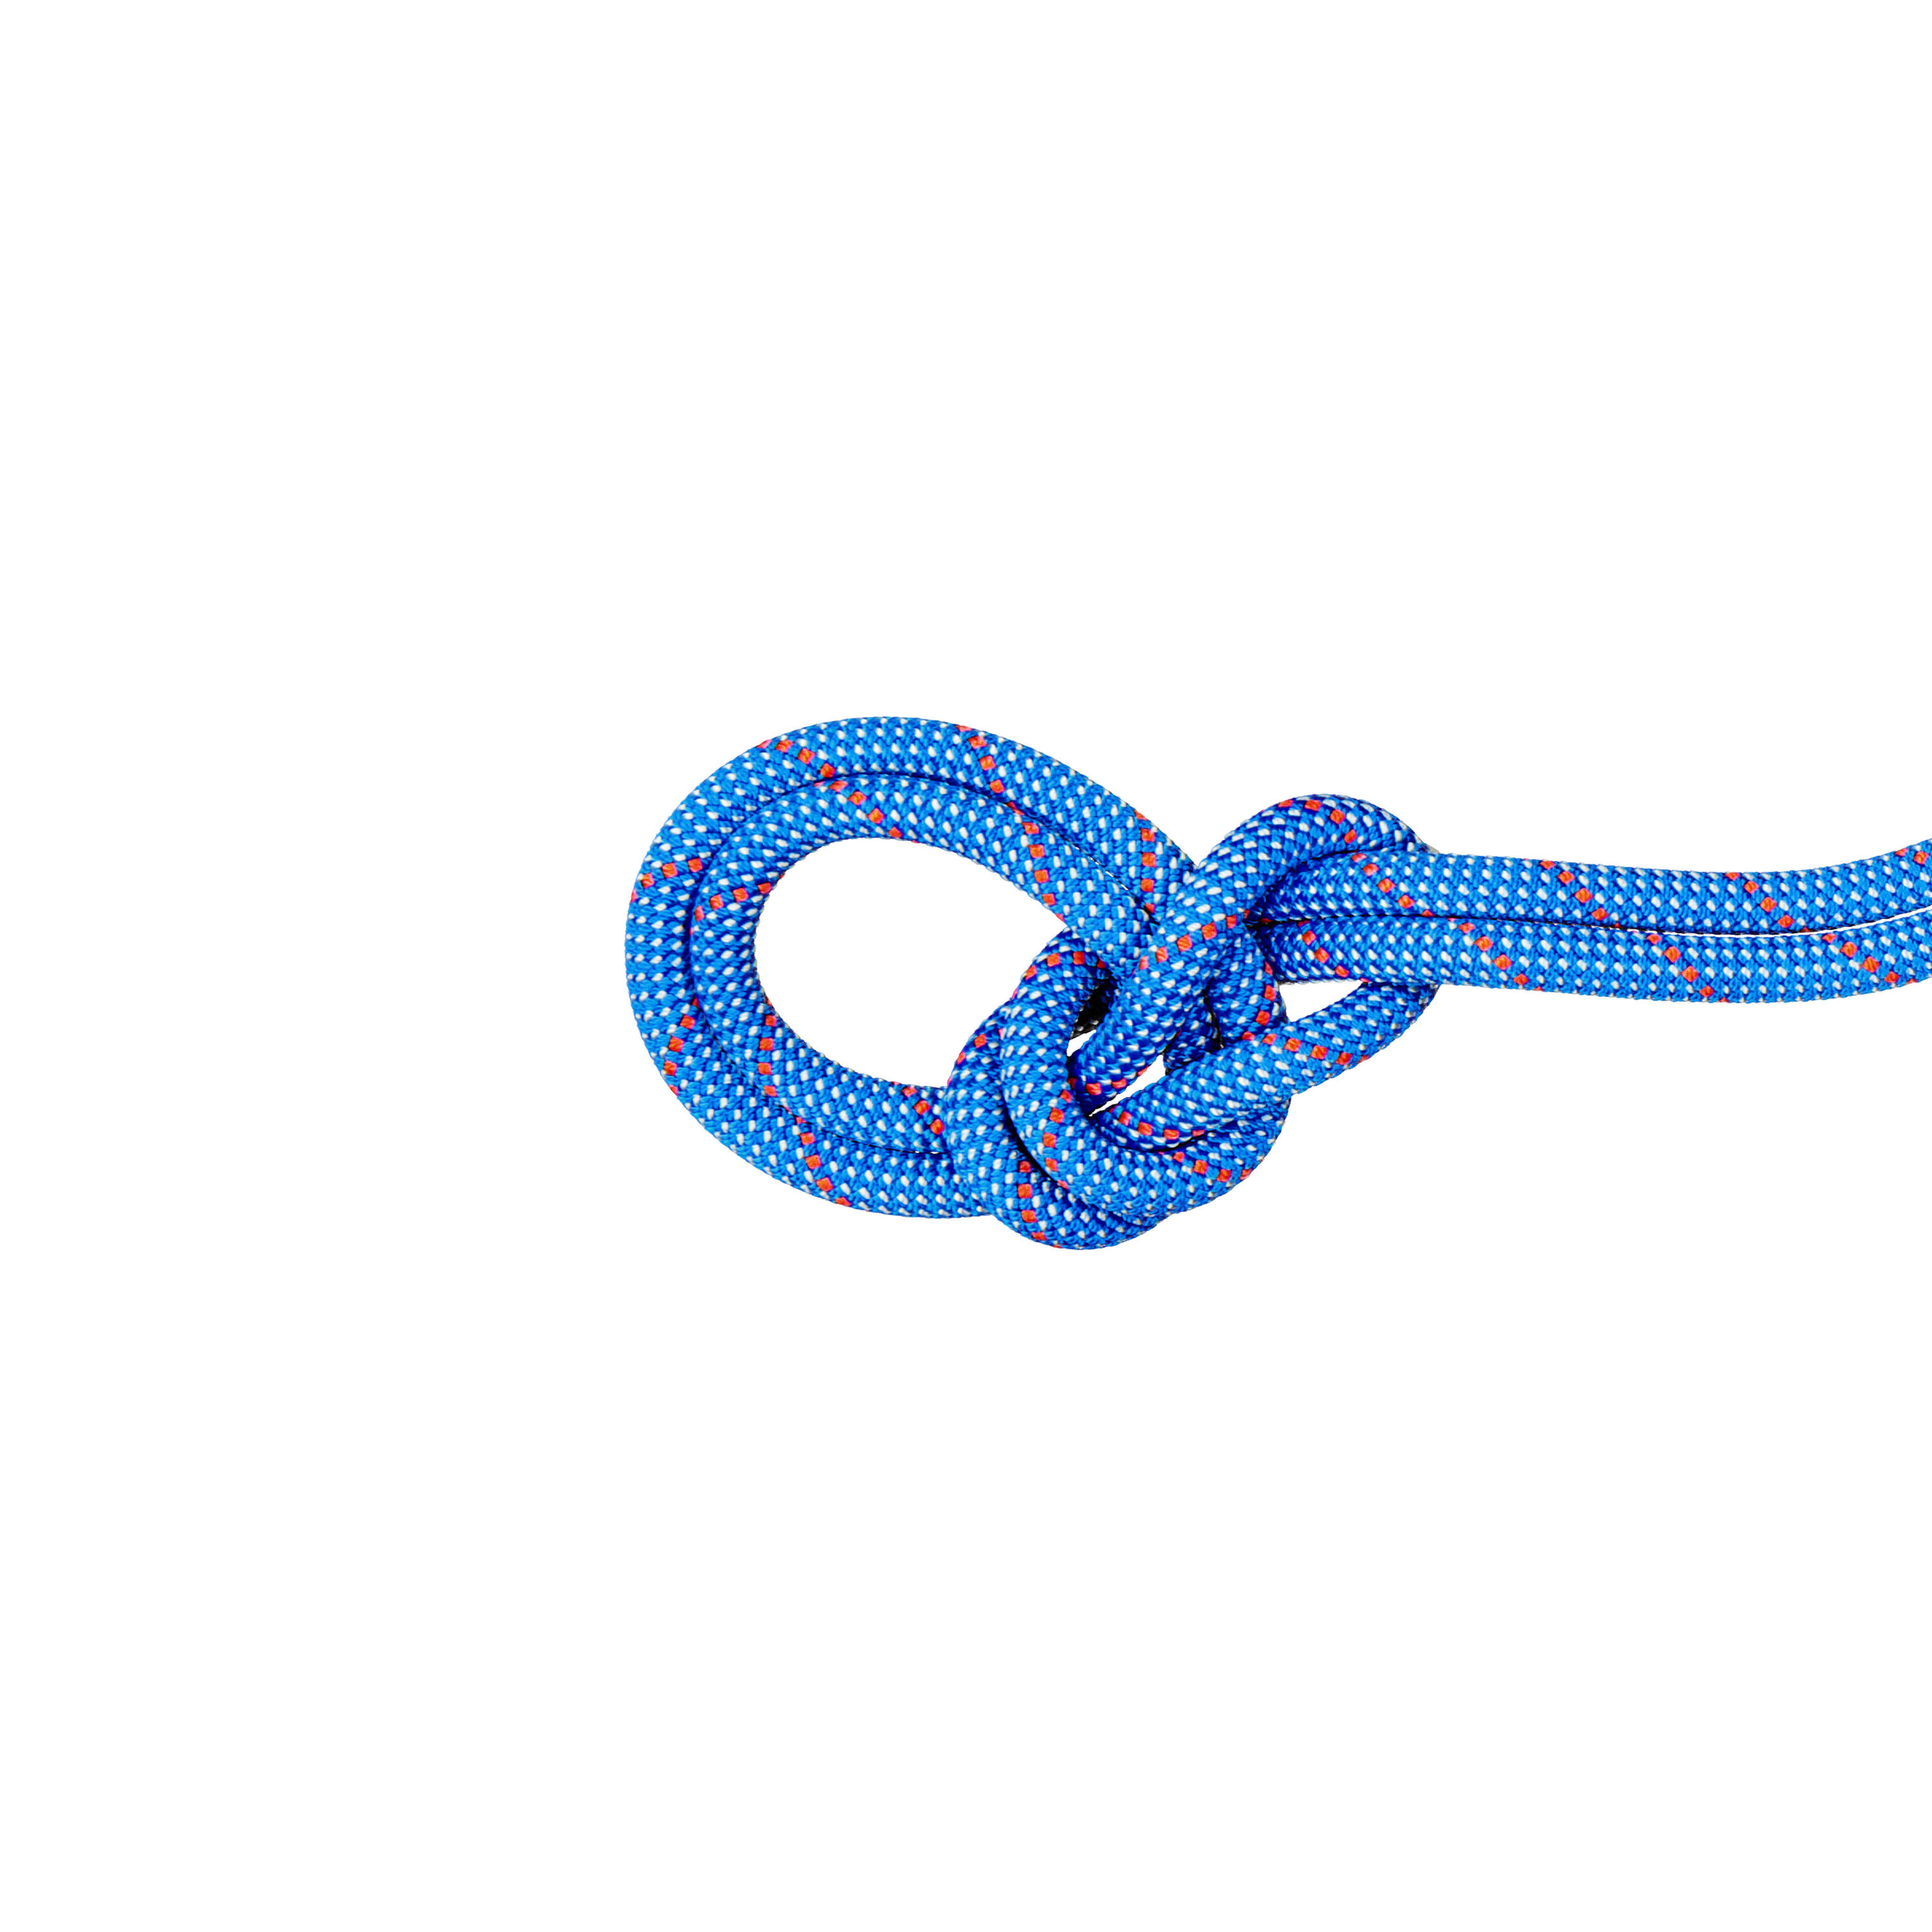 Crag Classic Single Rope 9.5 mm x 60m - Blue 1/4